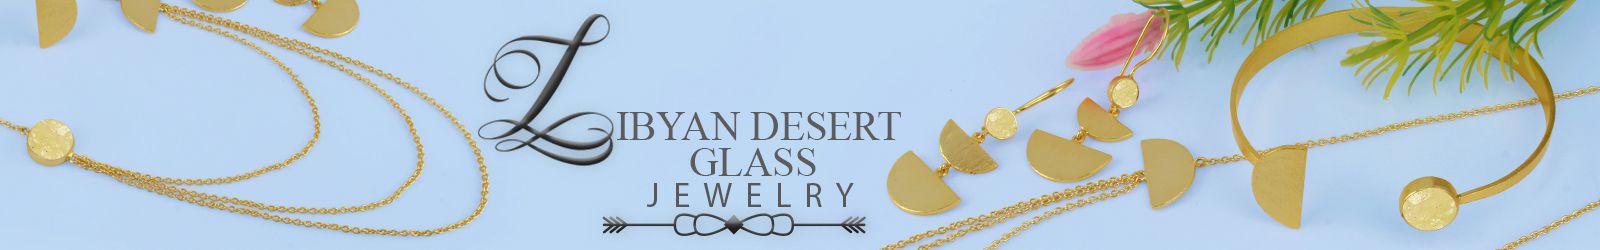 Wholesale Libyan Desert Glass Jewelry